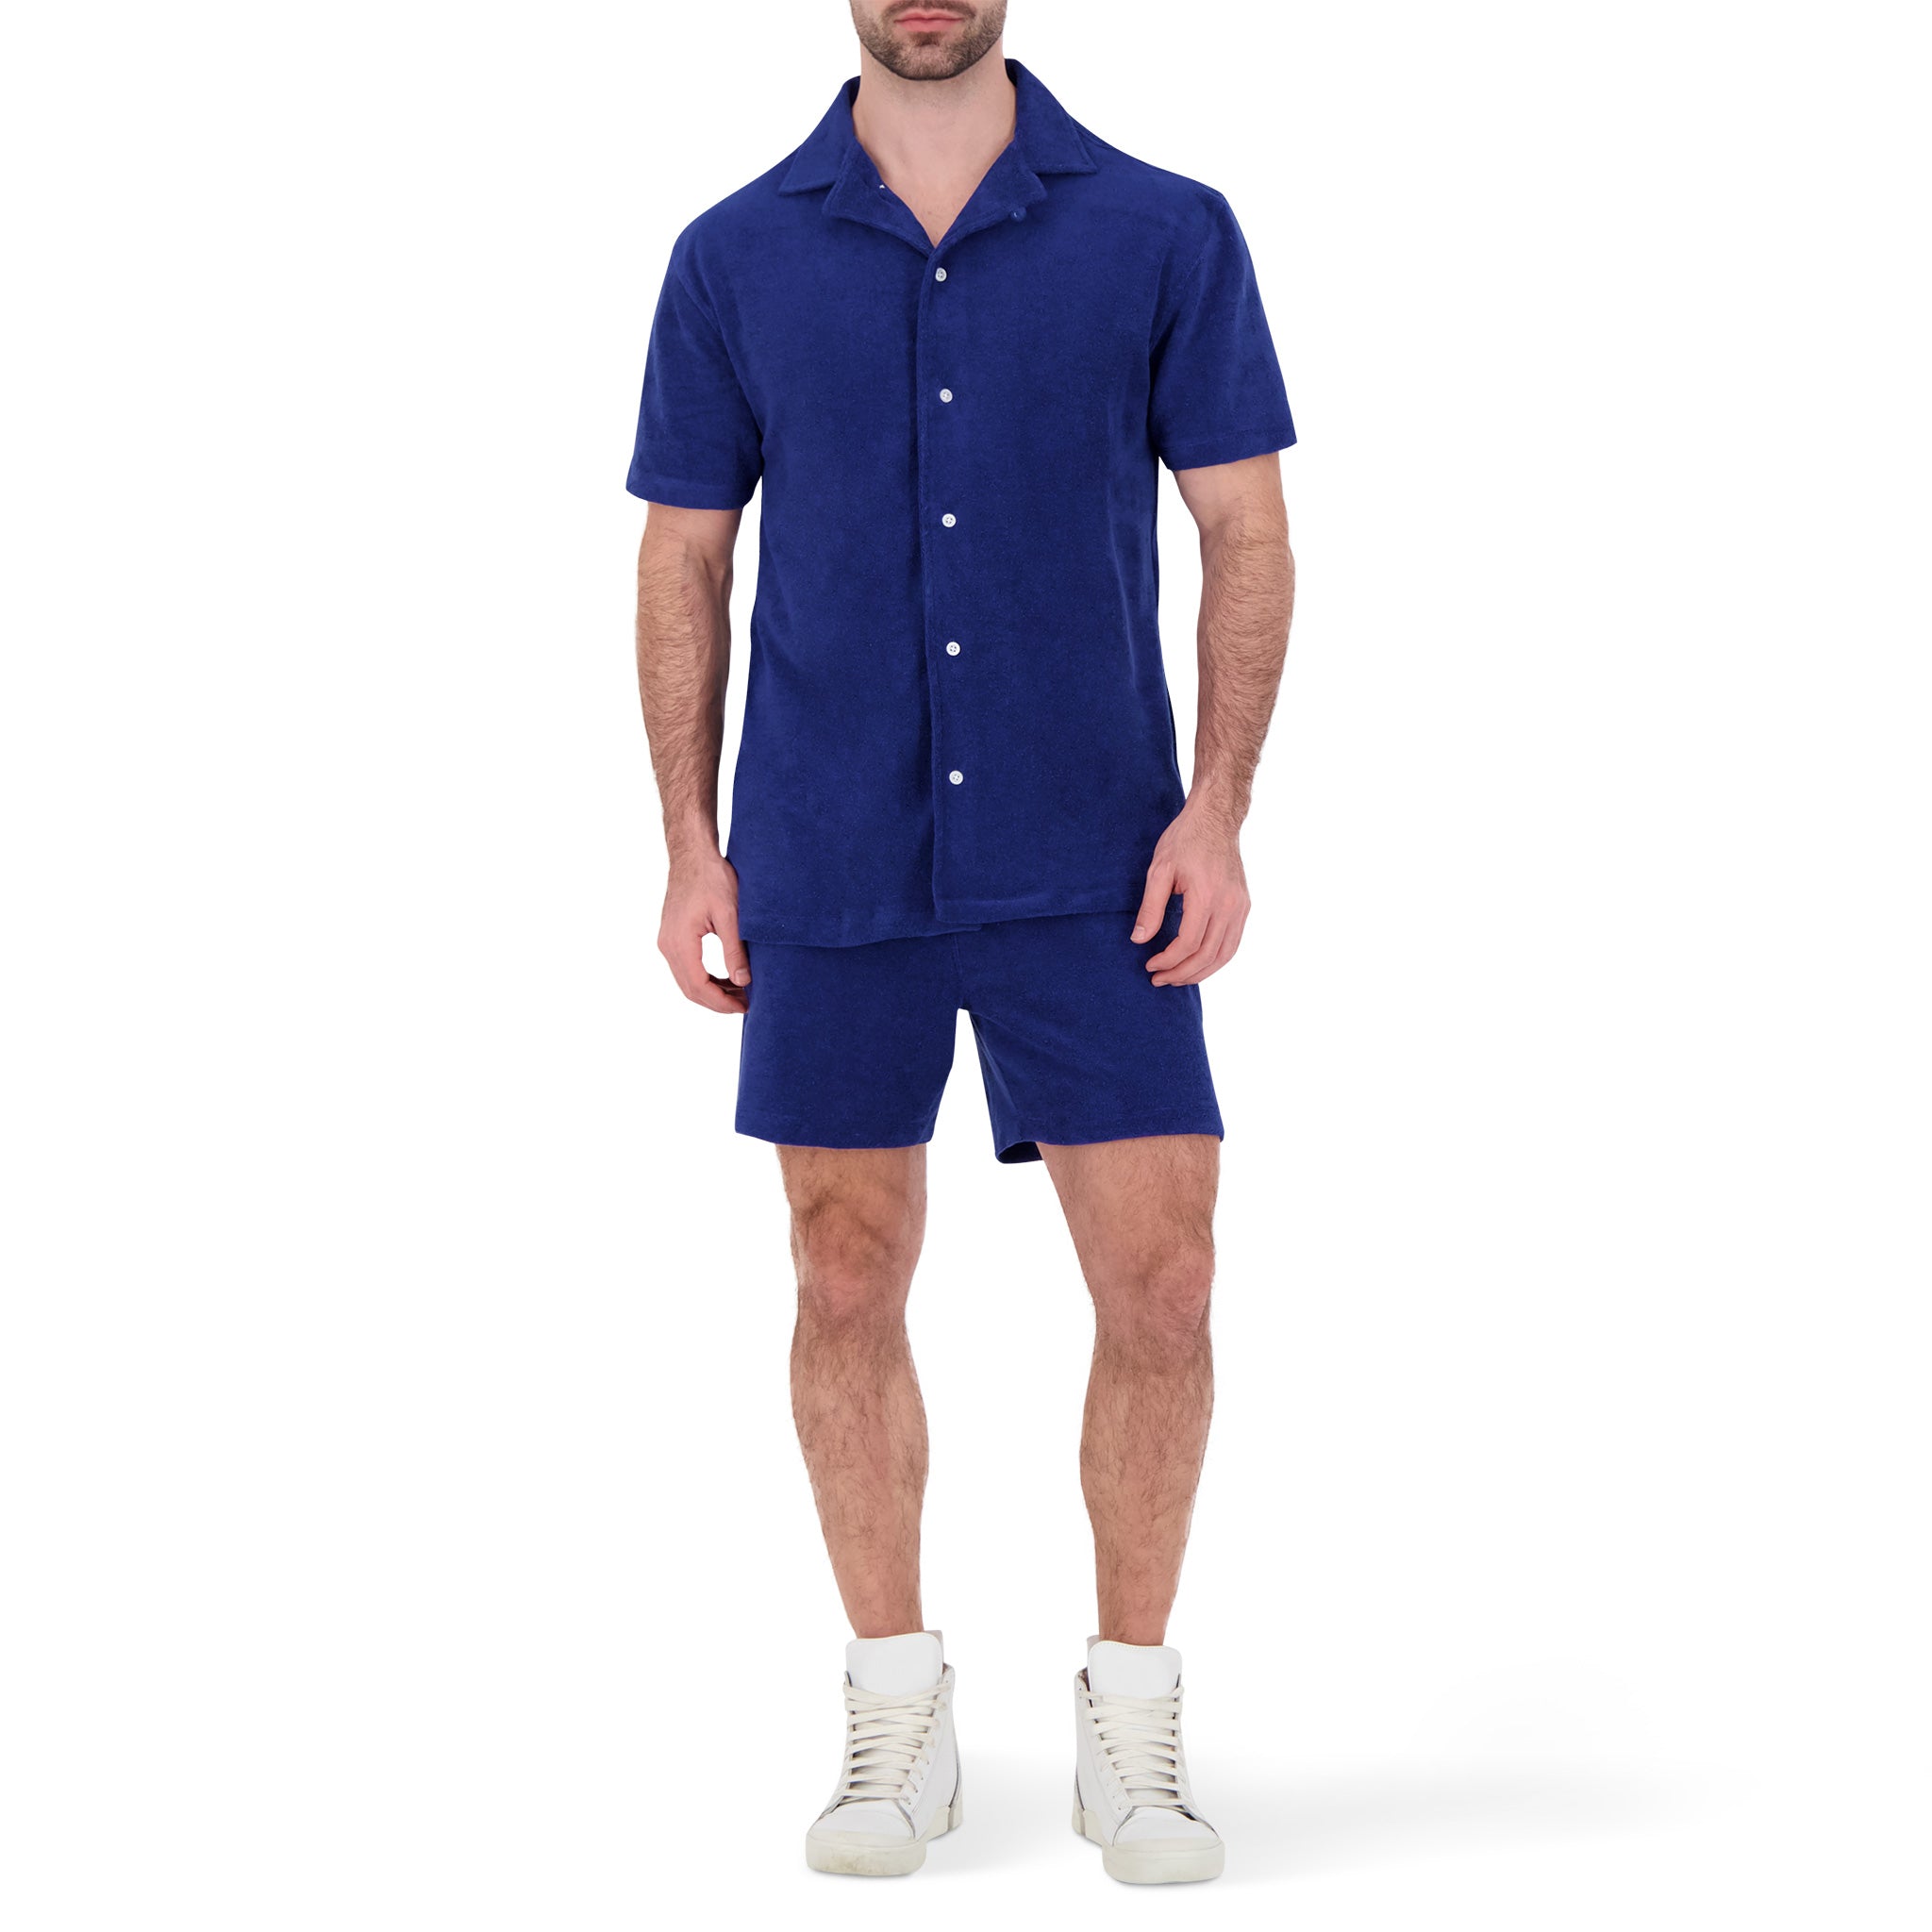 Terry Cloth Camp Shirt in Indigo Blue